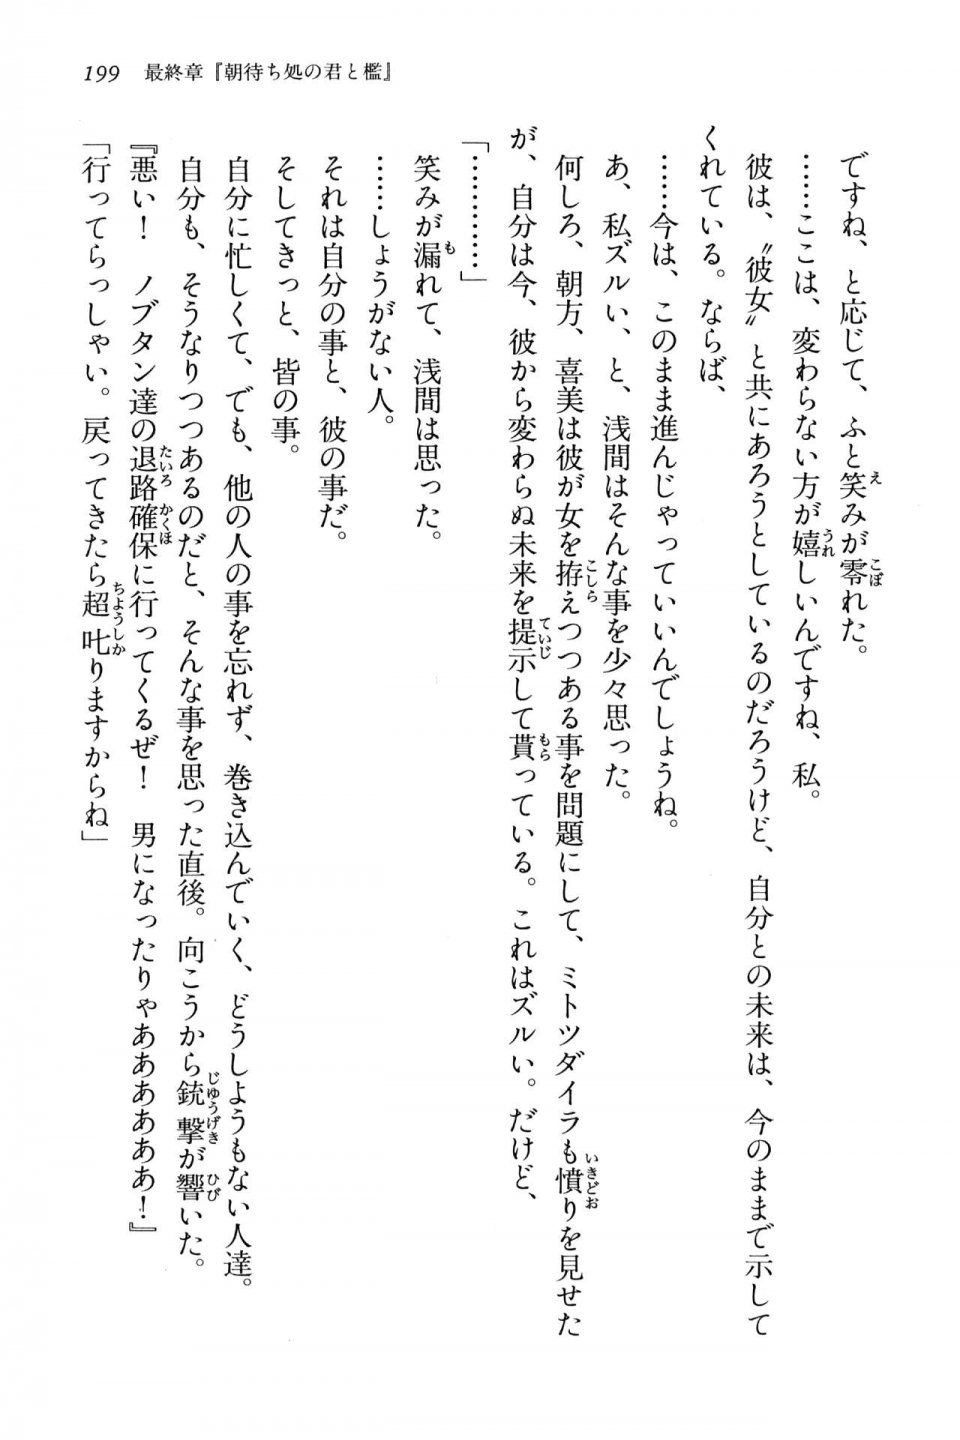 Kyoukai Senjou no Horizon BD Special Mininovel Vol 4(2B) - Photo #203